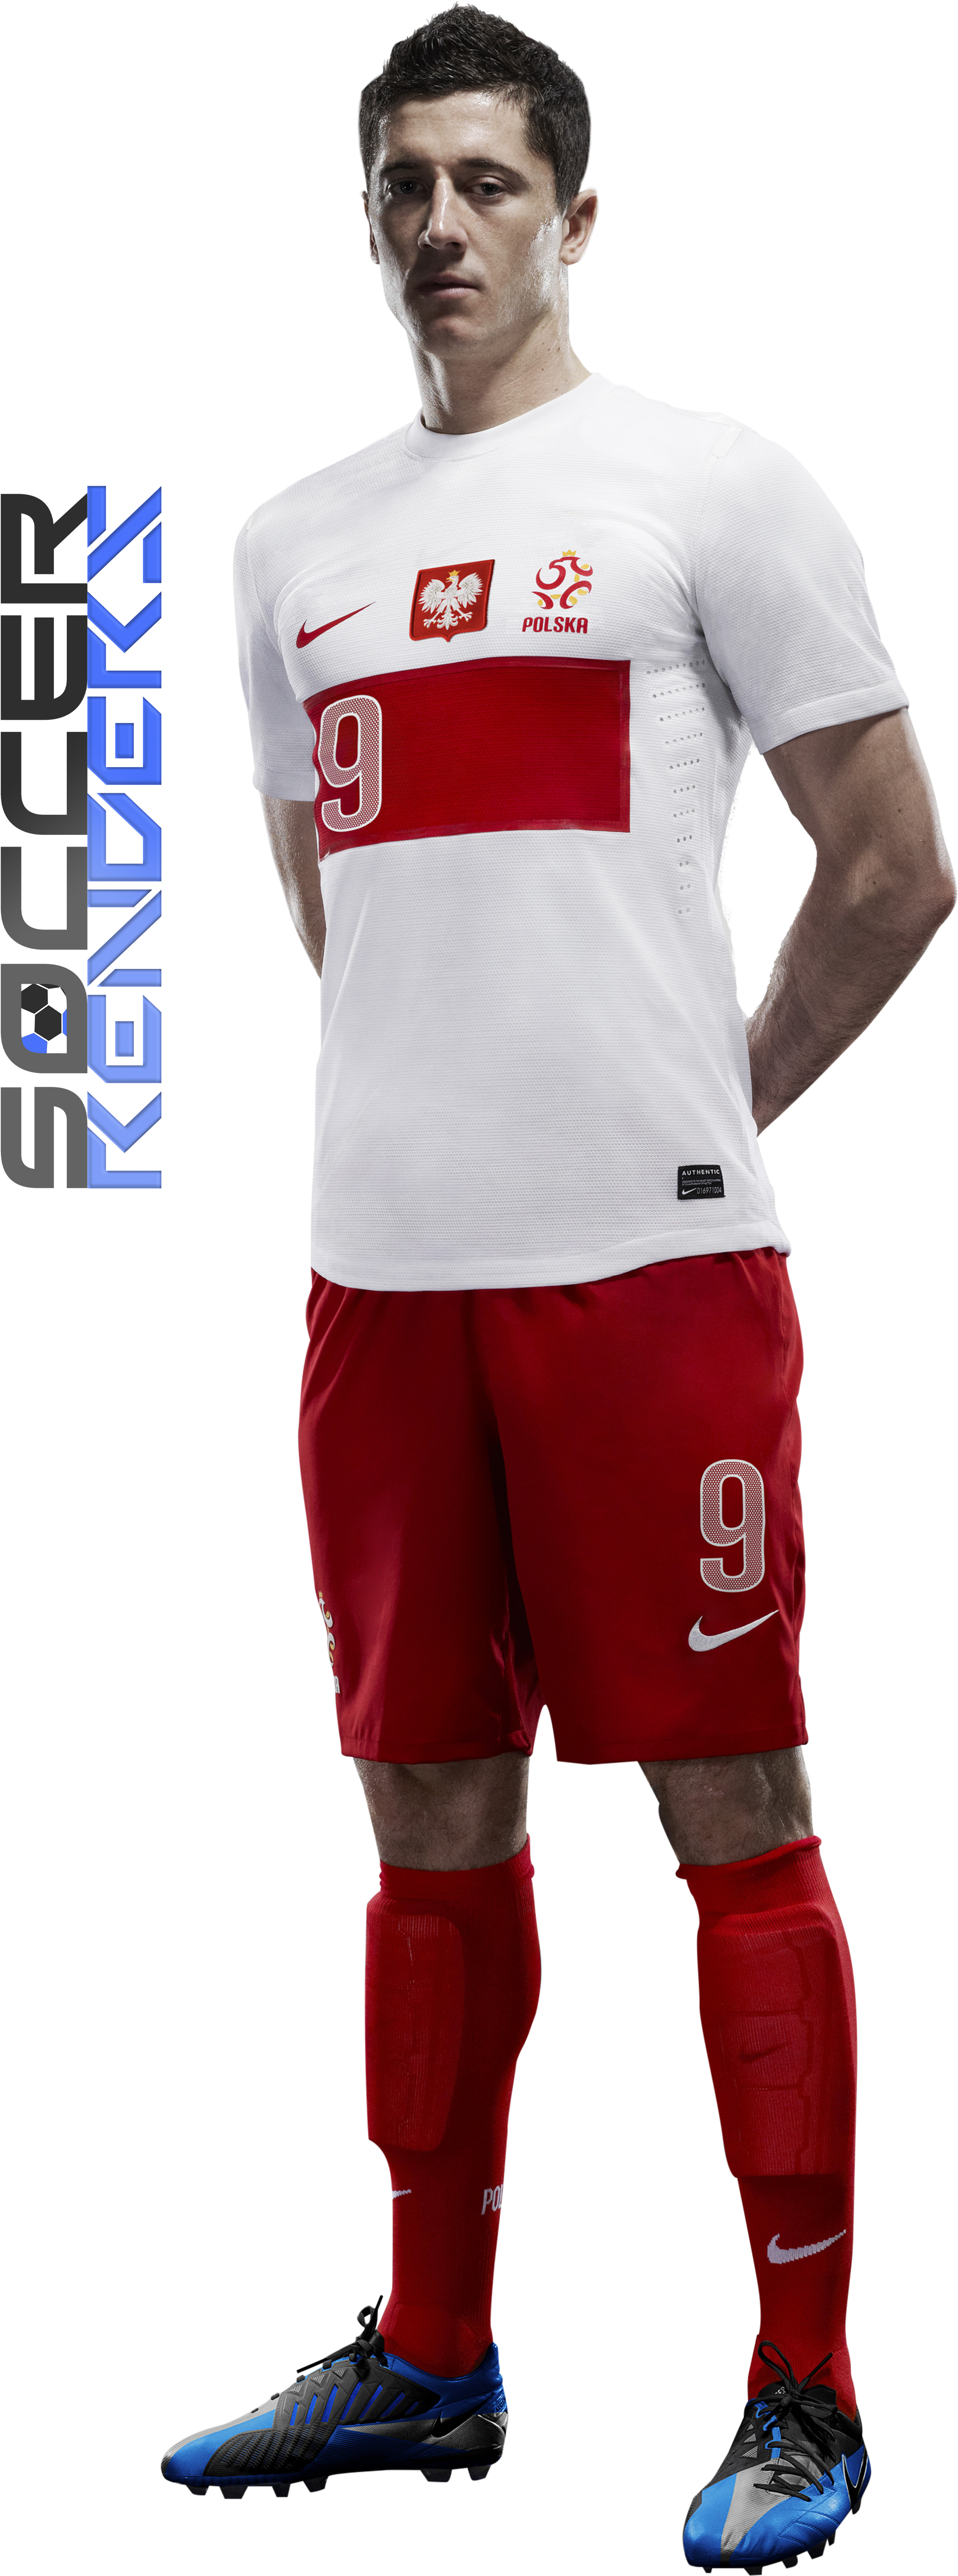 Soccer Playerin Poland Kit PNG